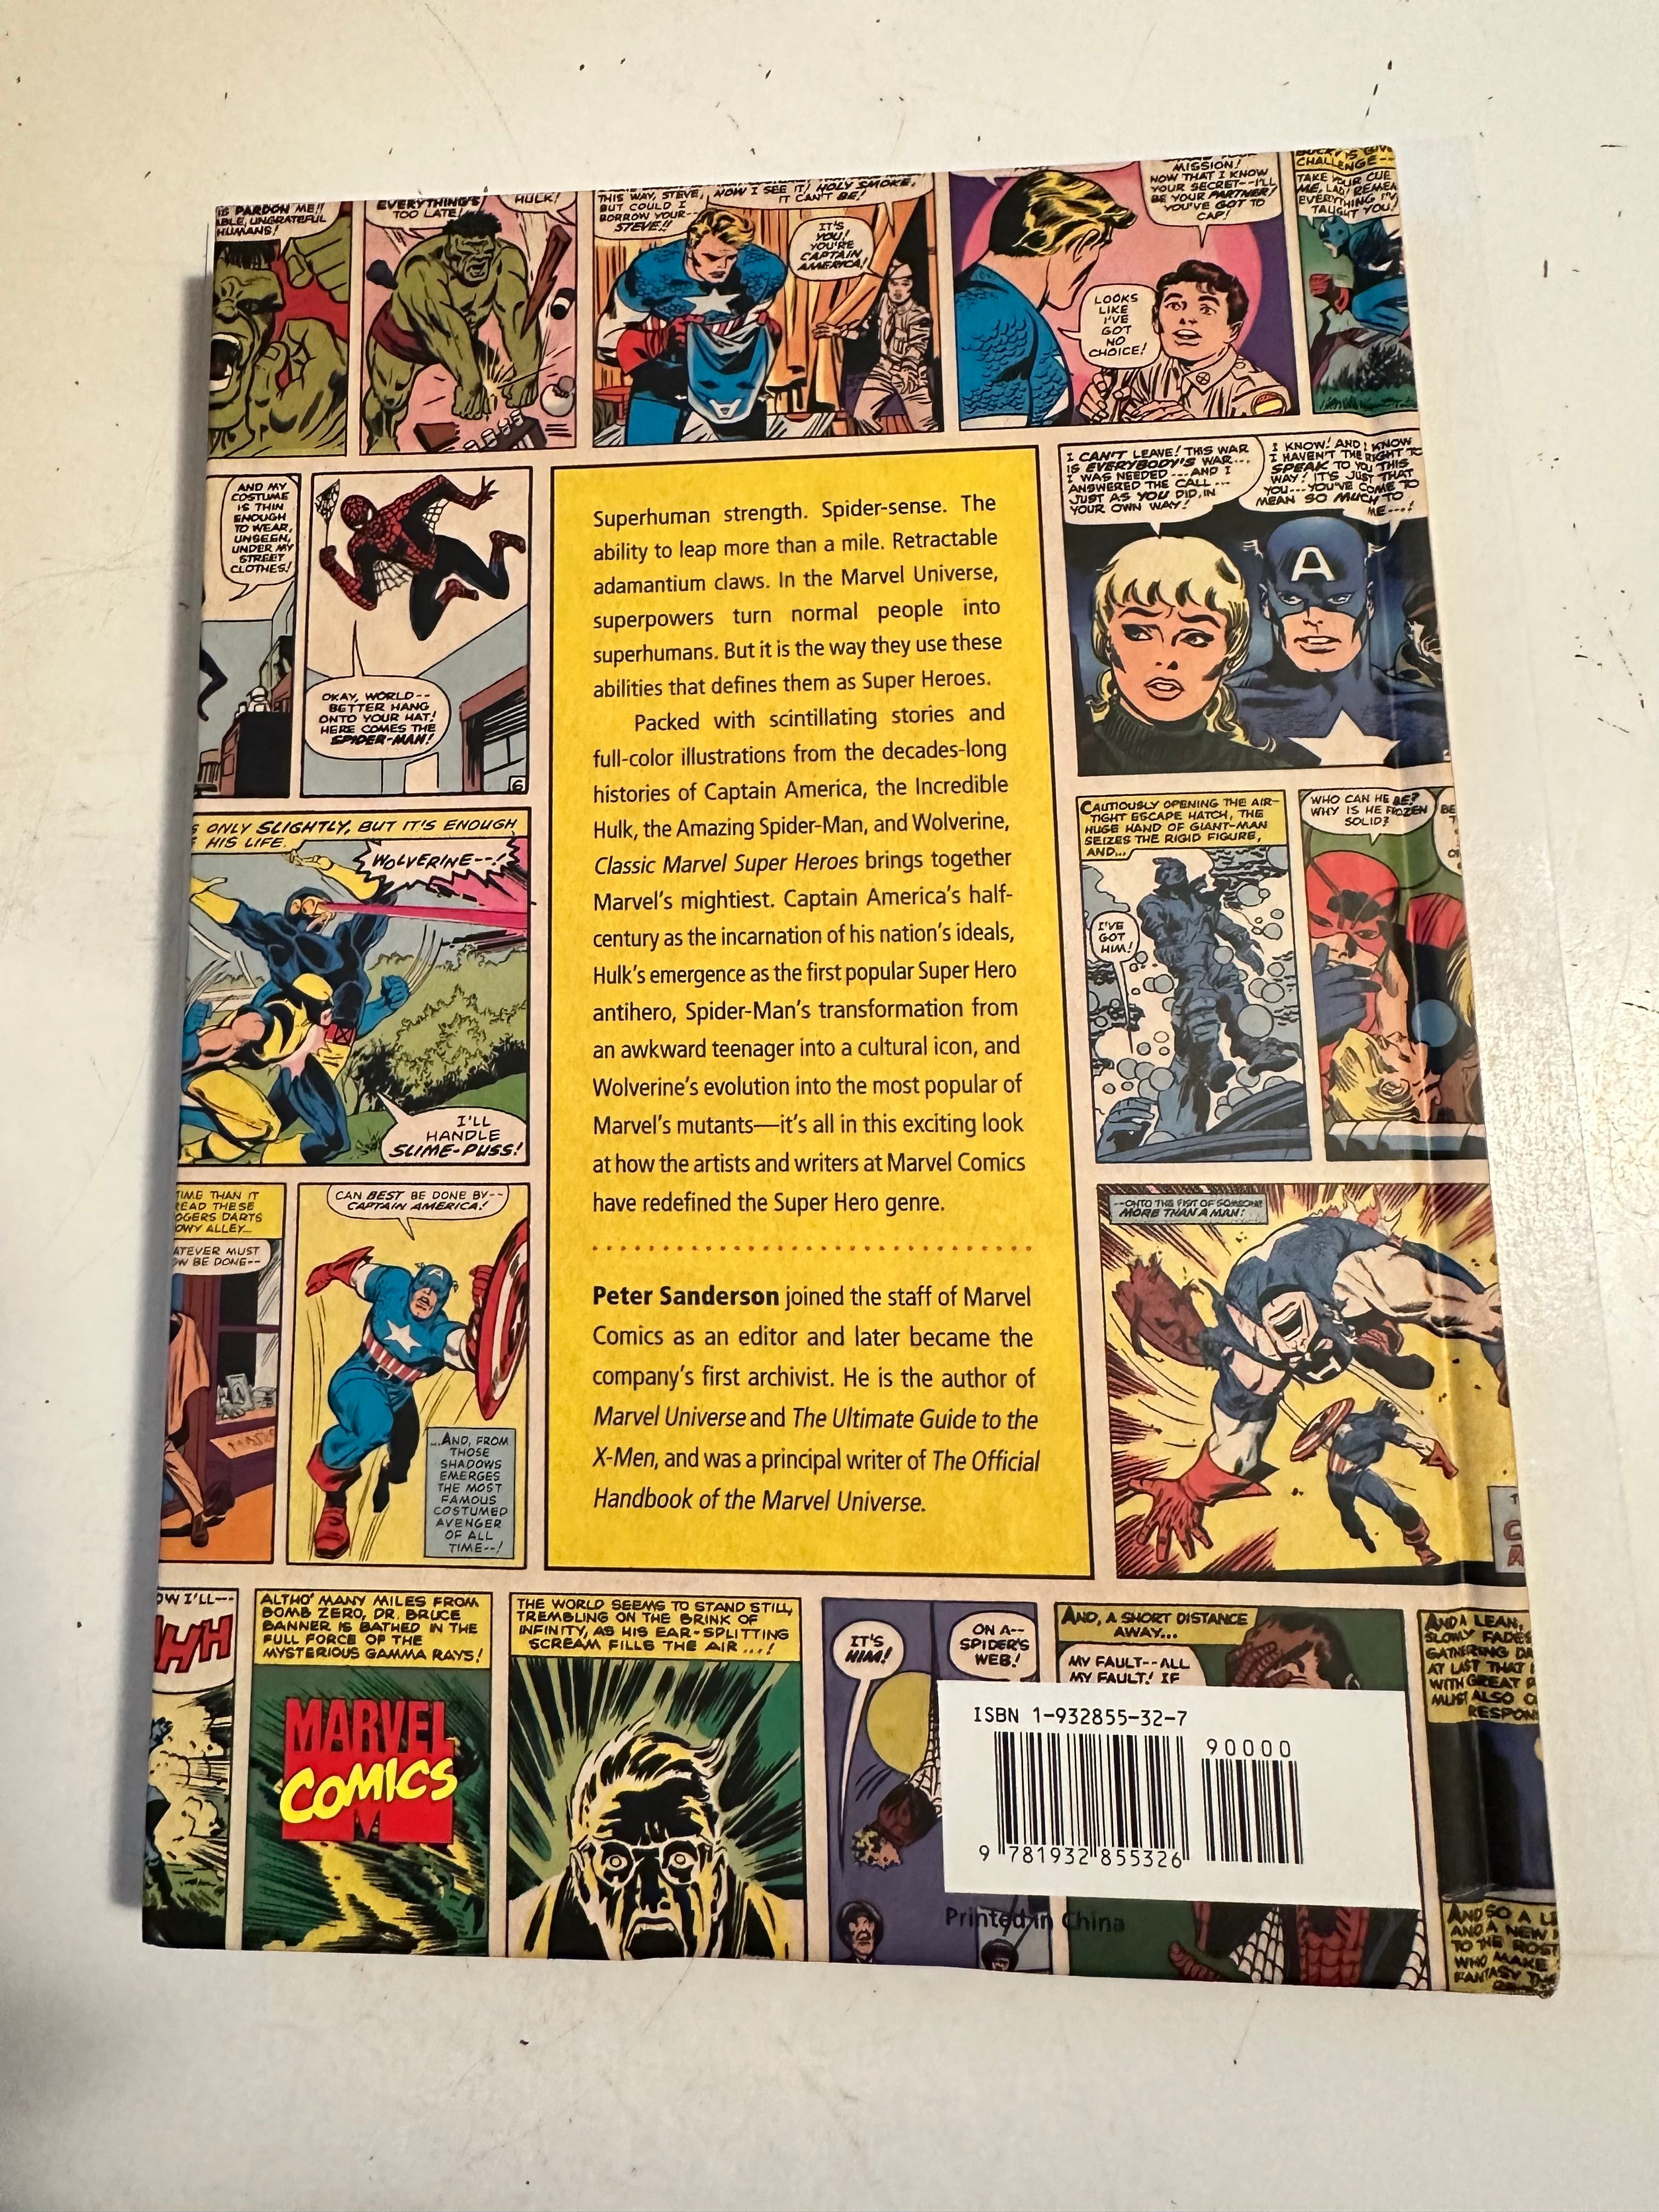 Classic marvel superheroes storybook, 2005